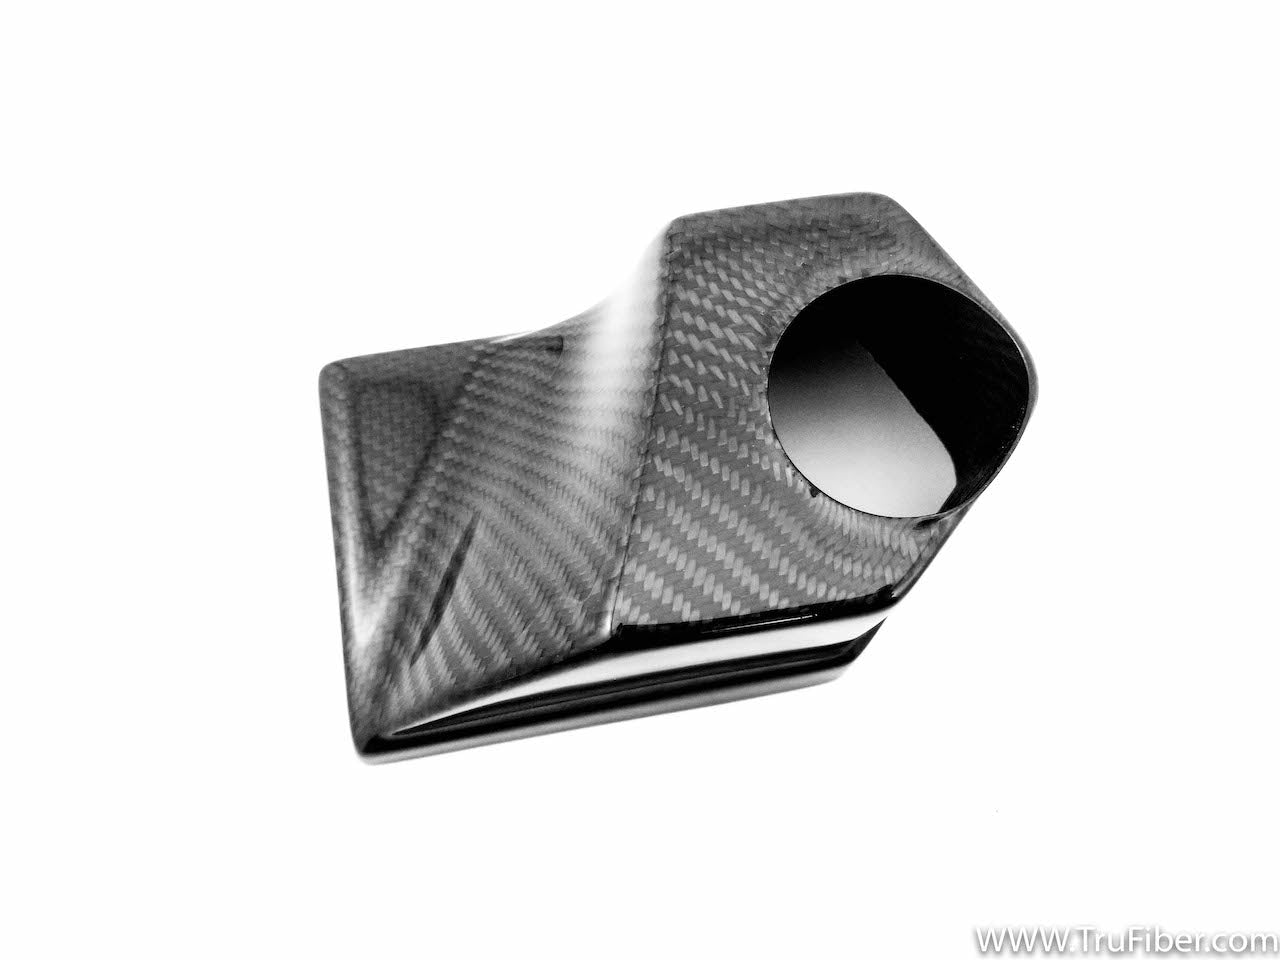 2016-2019 Camaro Carbon Fiber LG473 Brake Fluid Reservoir Cover - EXCLUSIVE